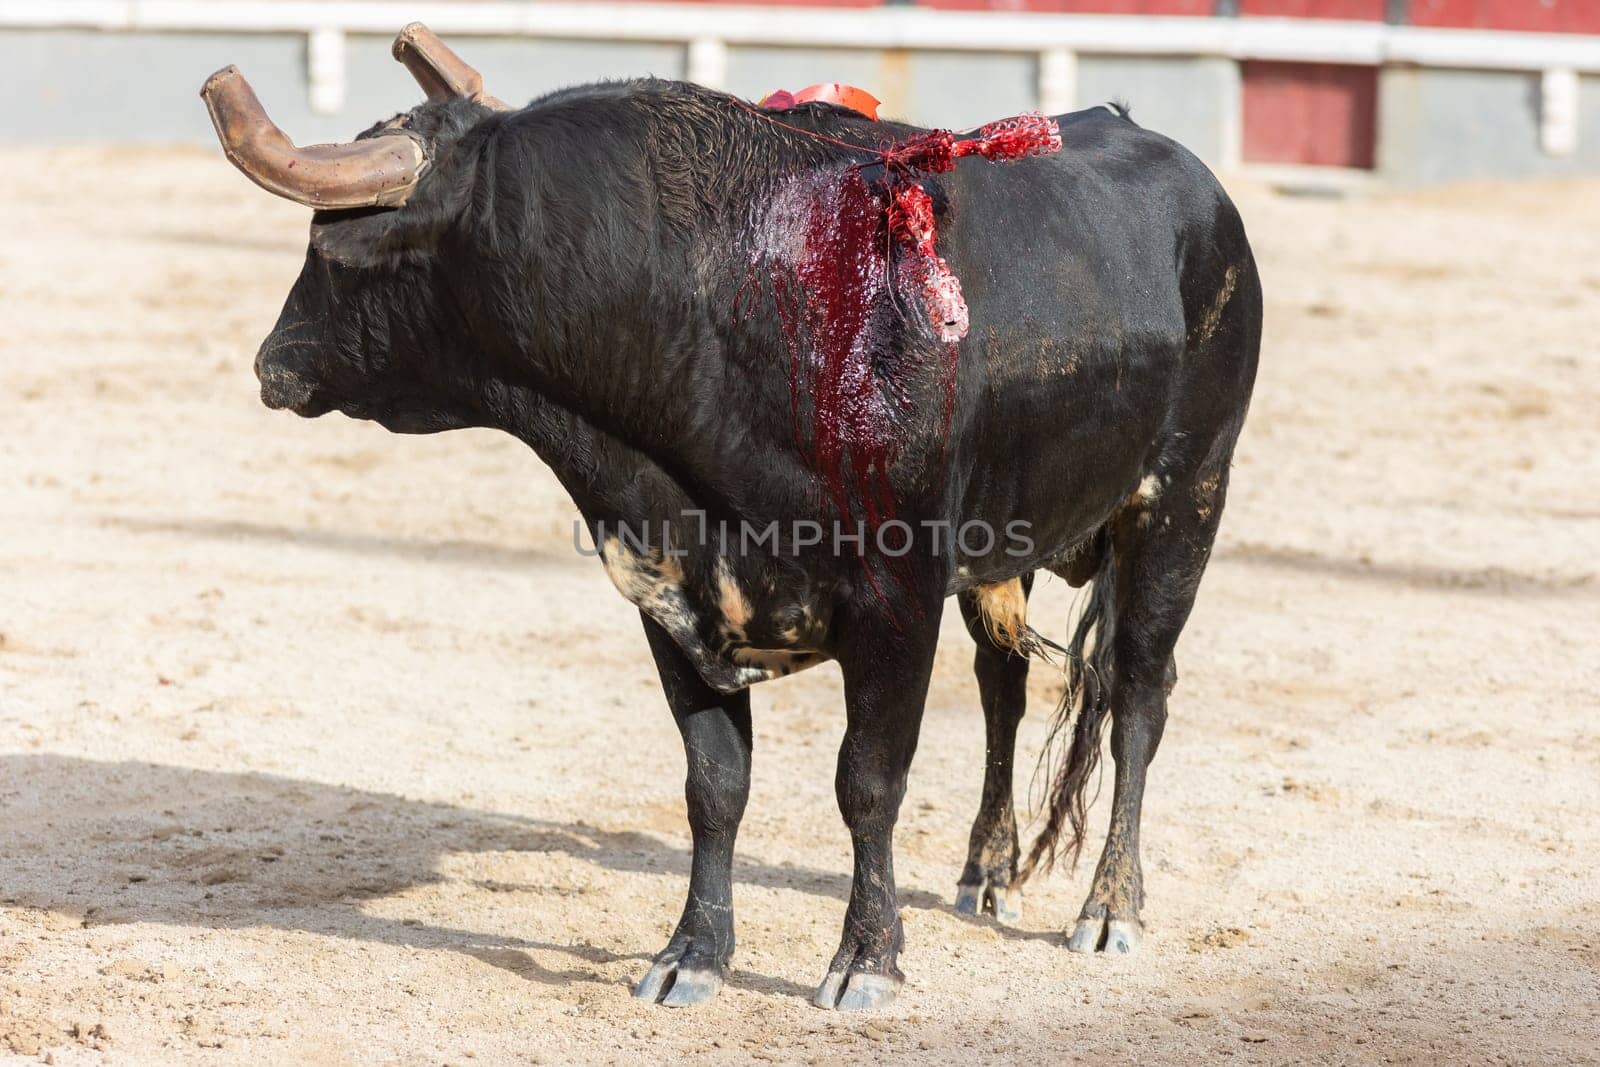 March 26, 2023 Lisbon, Portugal: Tourada - black bleeding bull in the arena. Mid shot